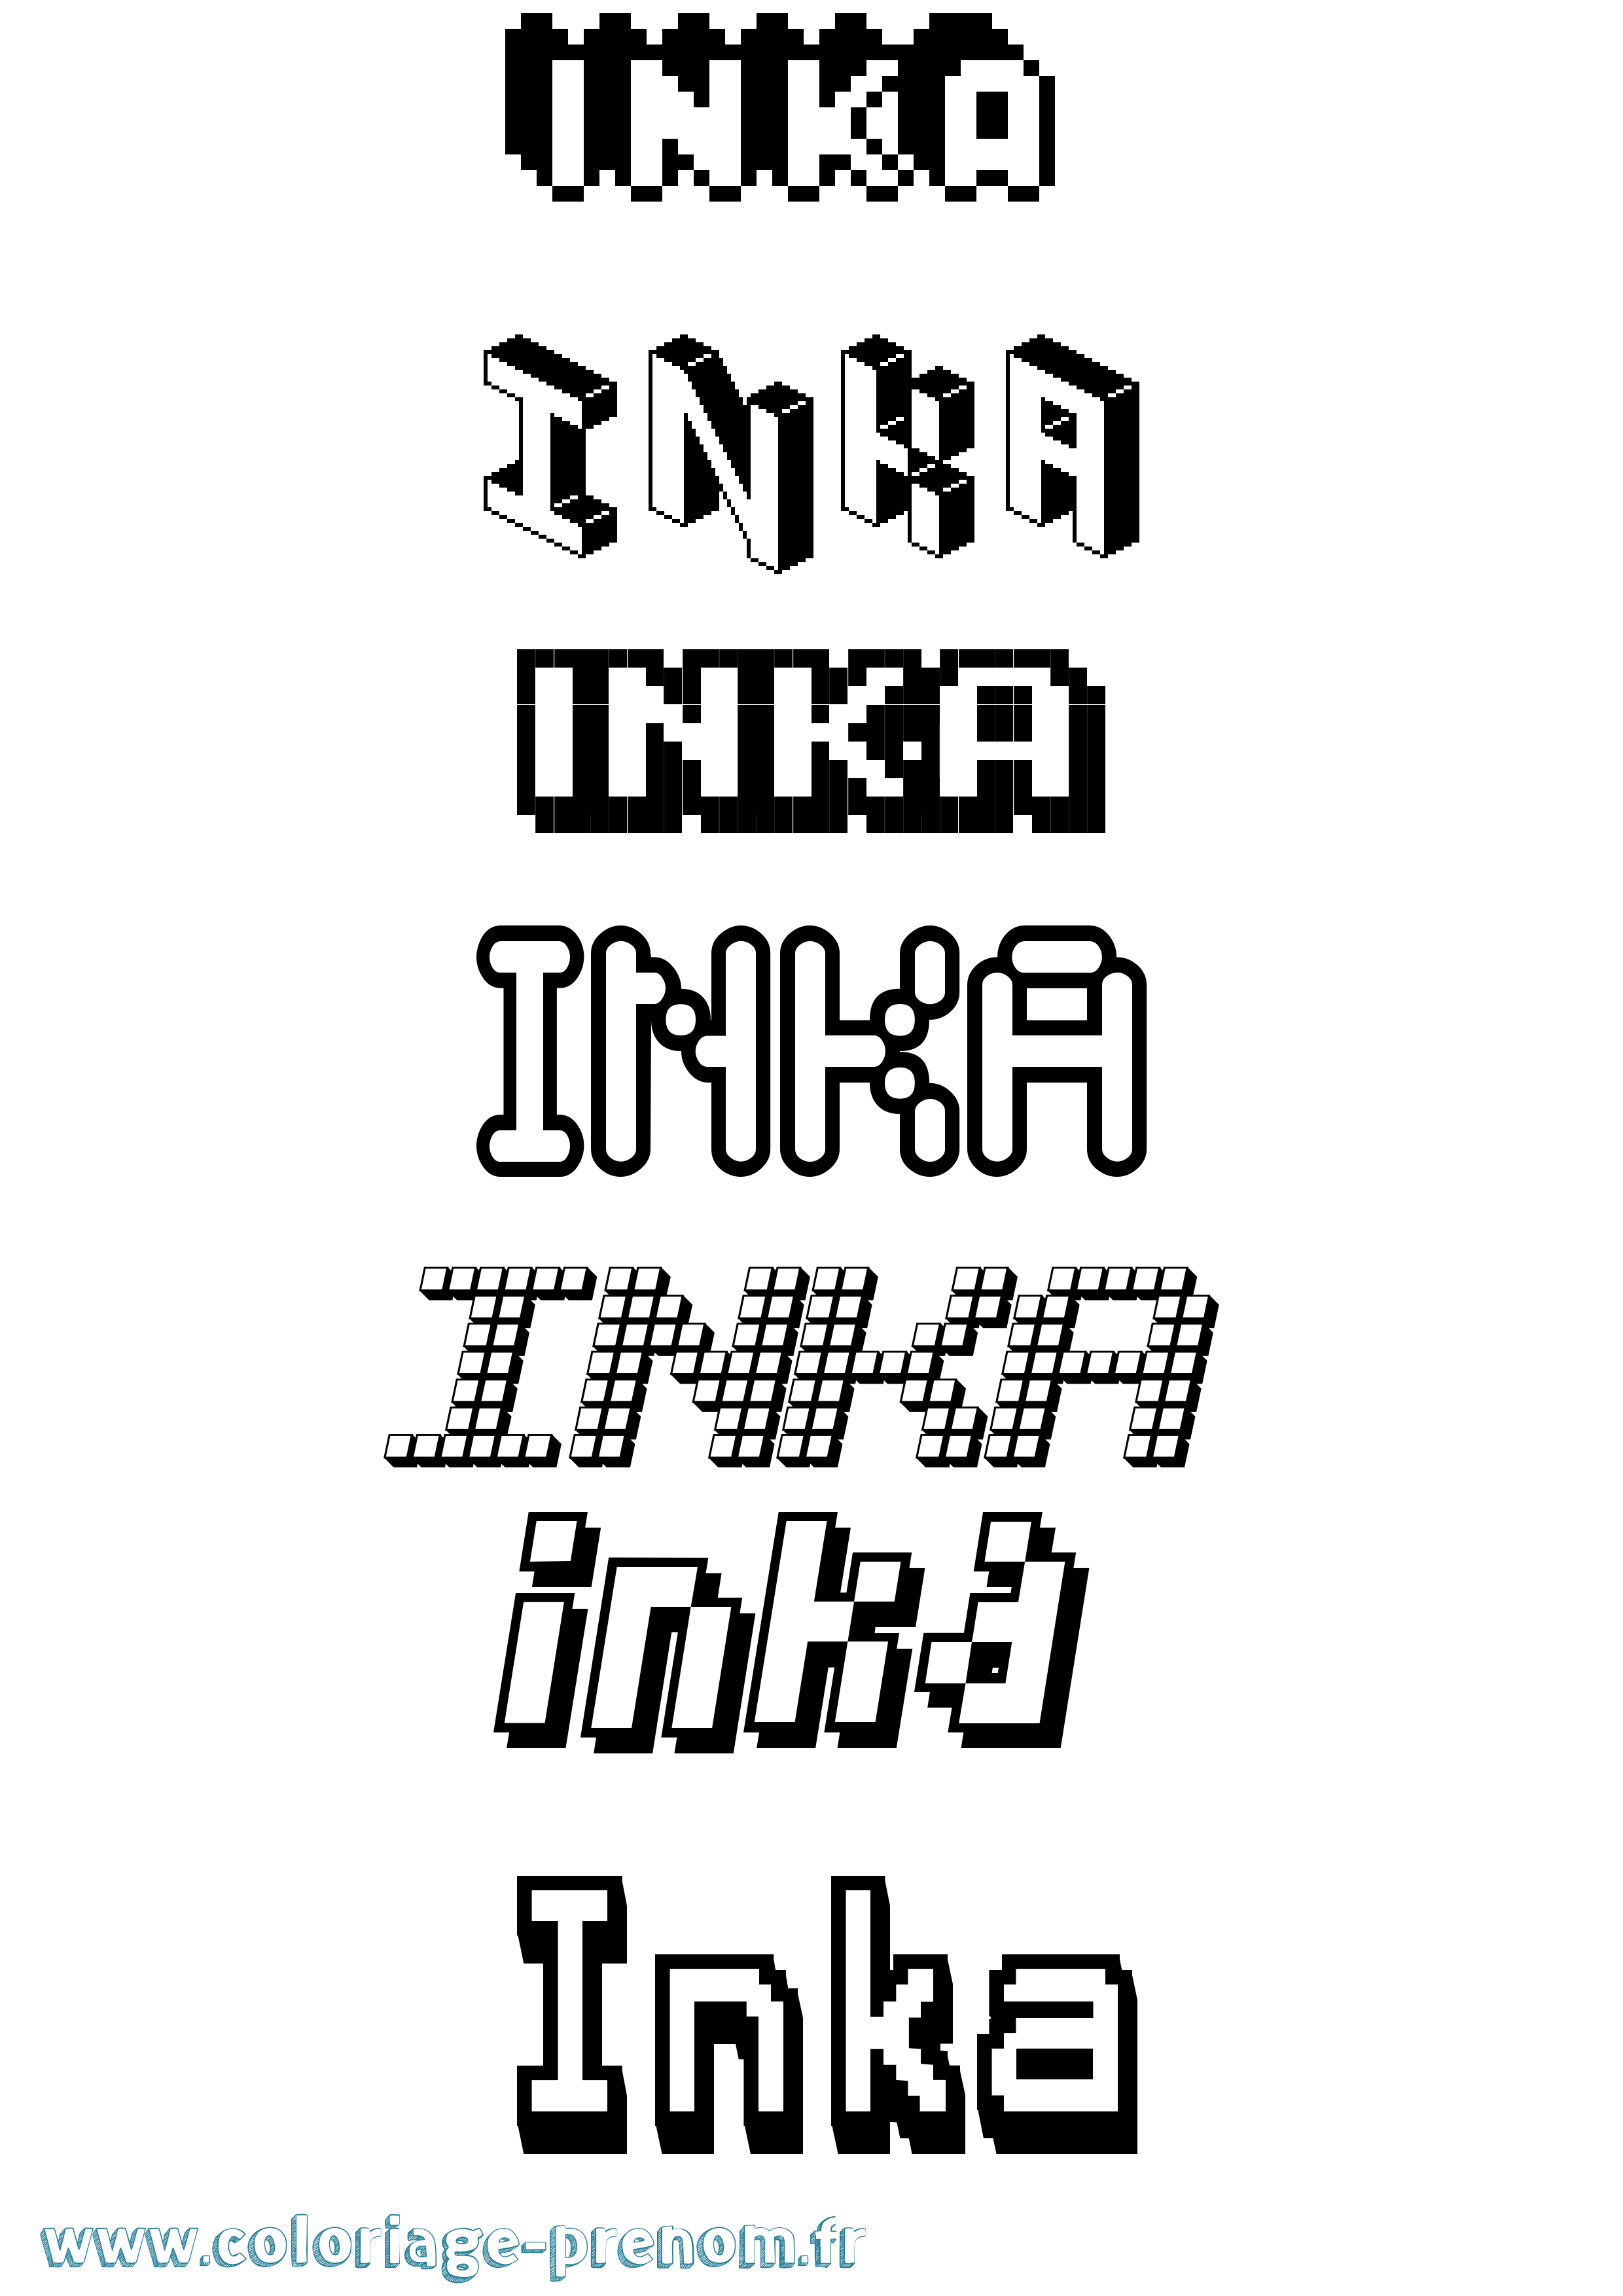 Coloriage prénom Inka Pixel